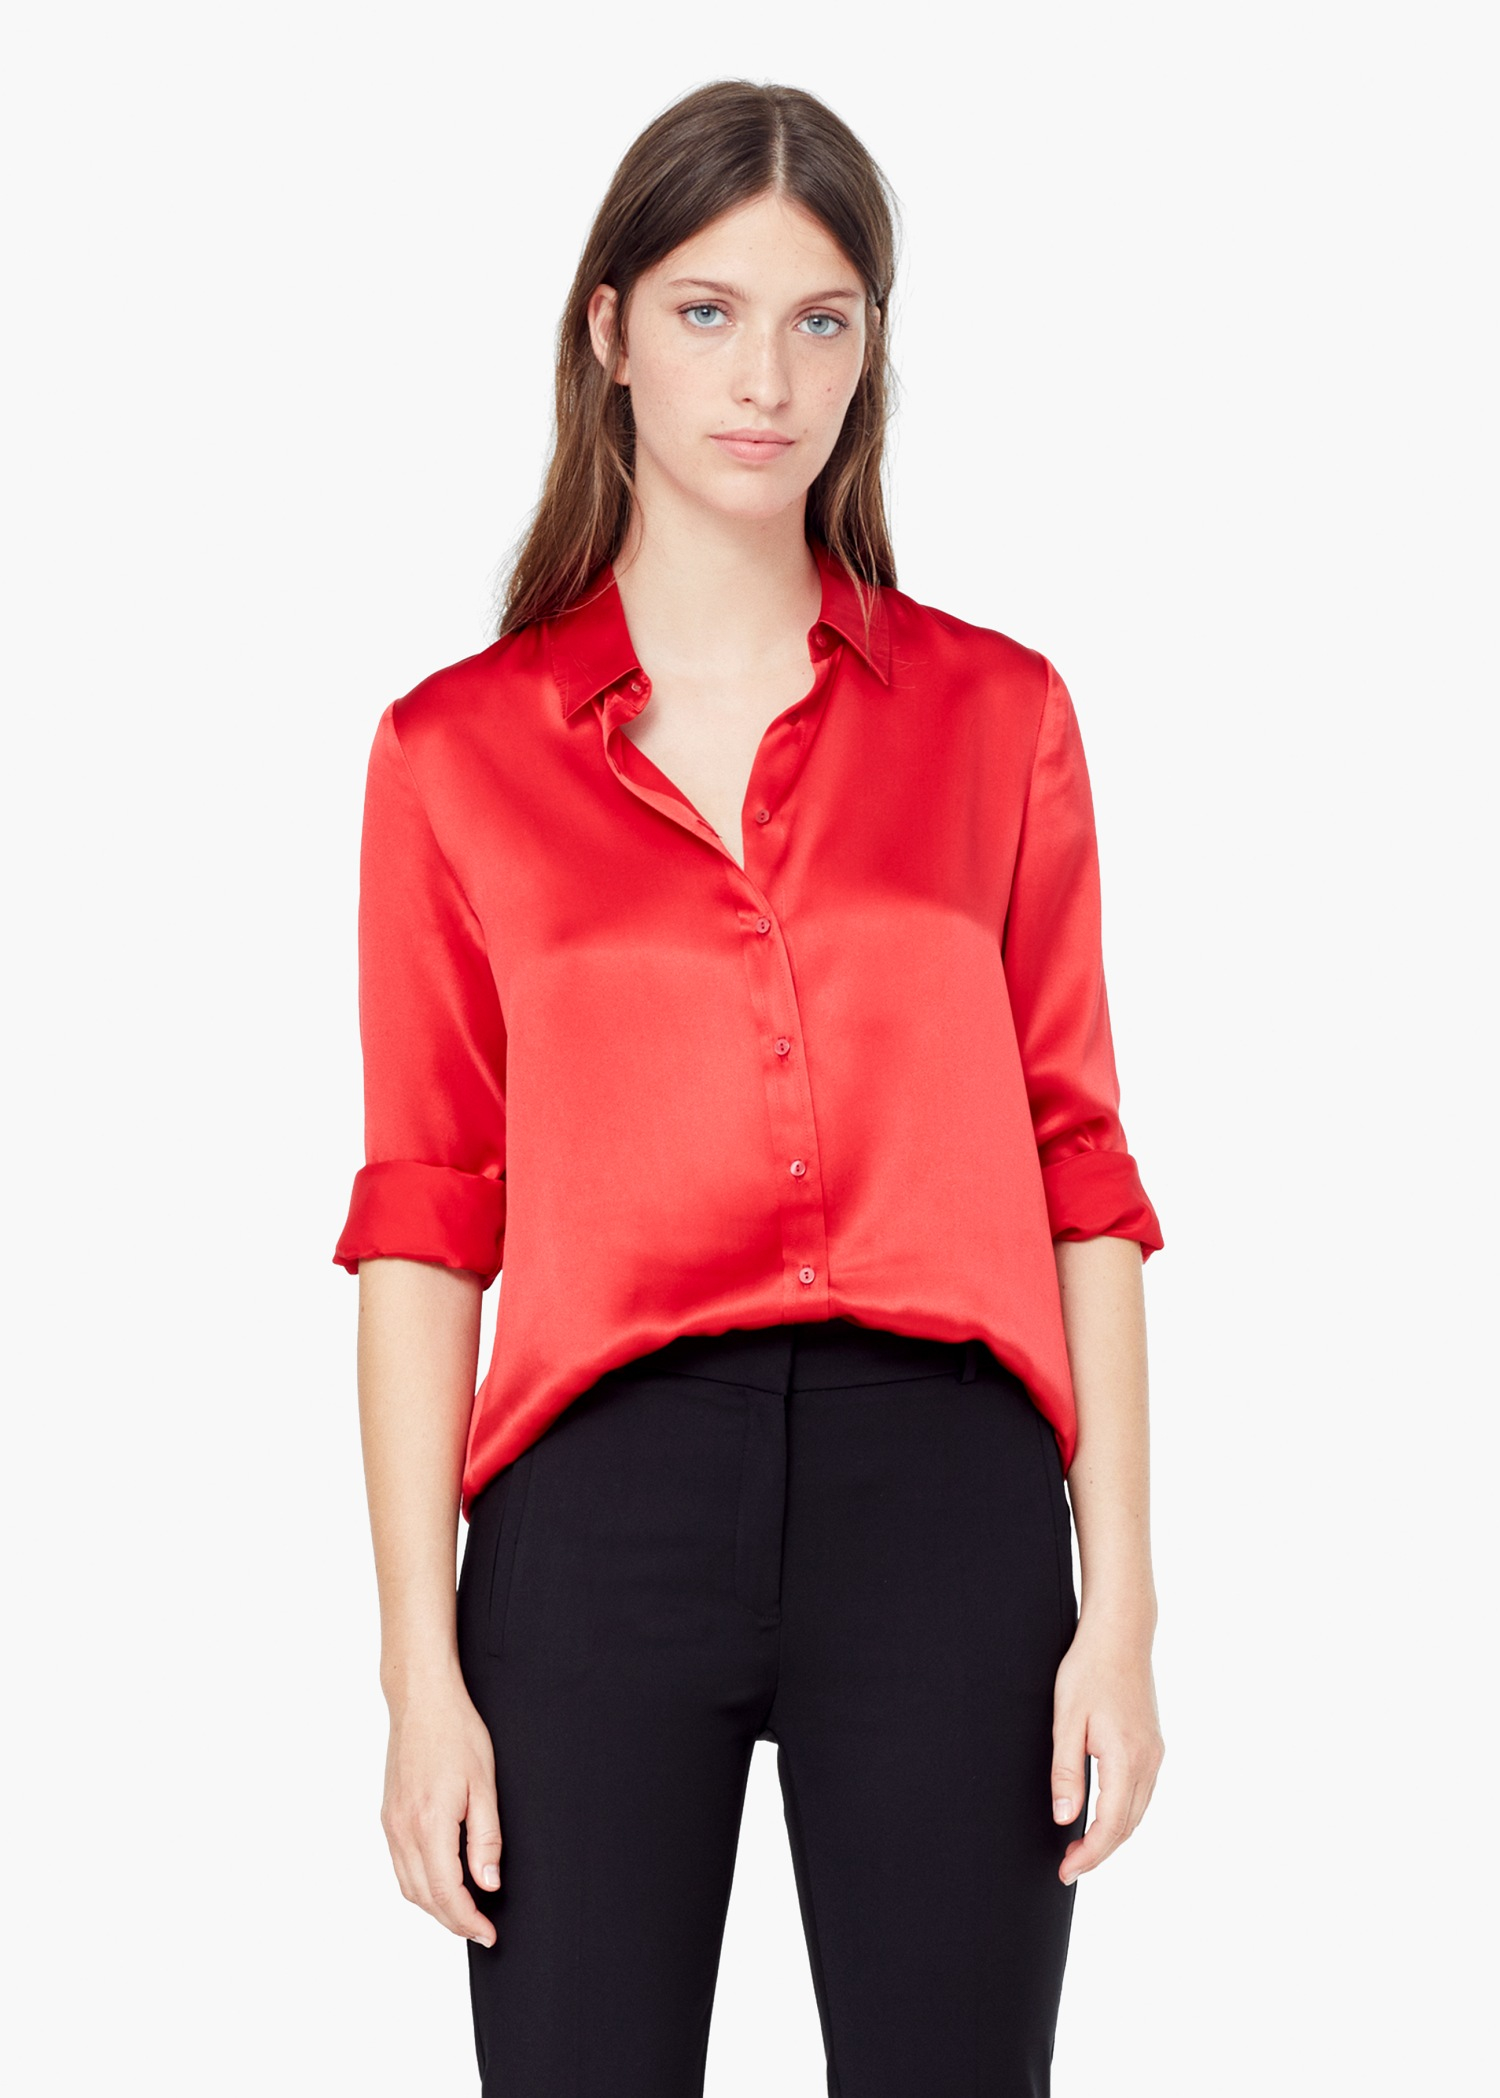 Lyst - Mango Satin Shirt in Red